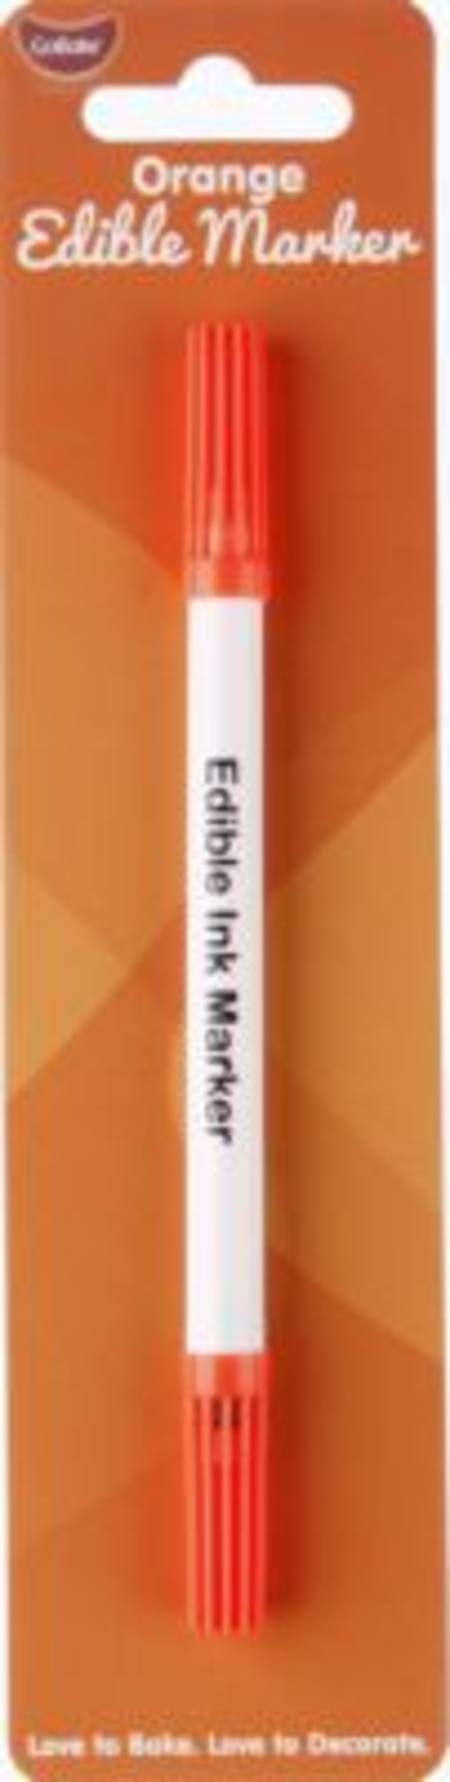 Edible Marker Pen Orange